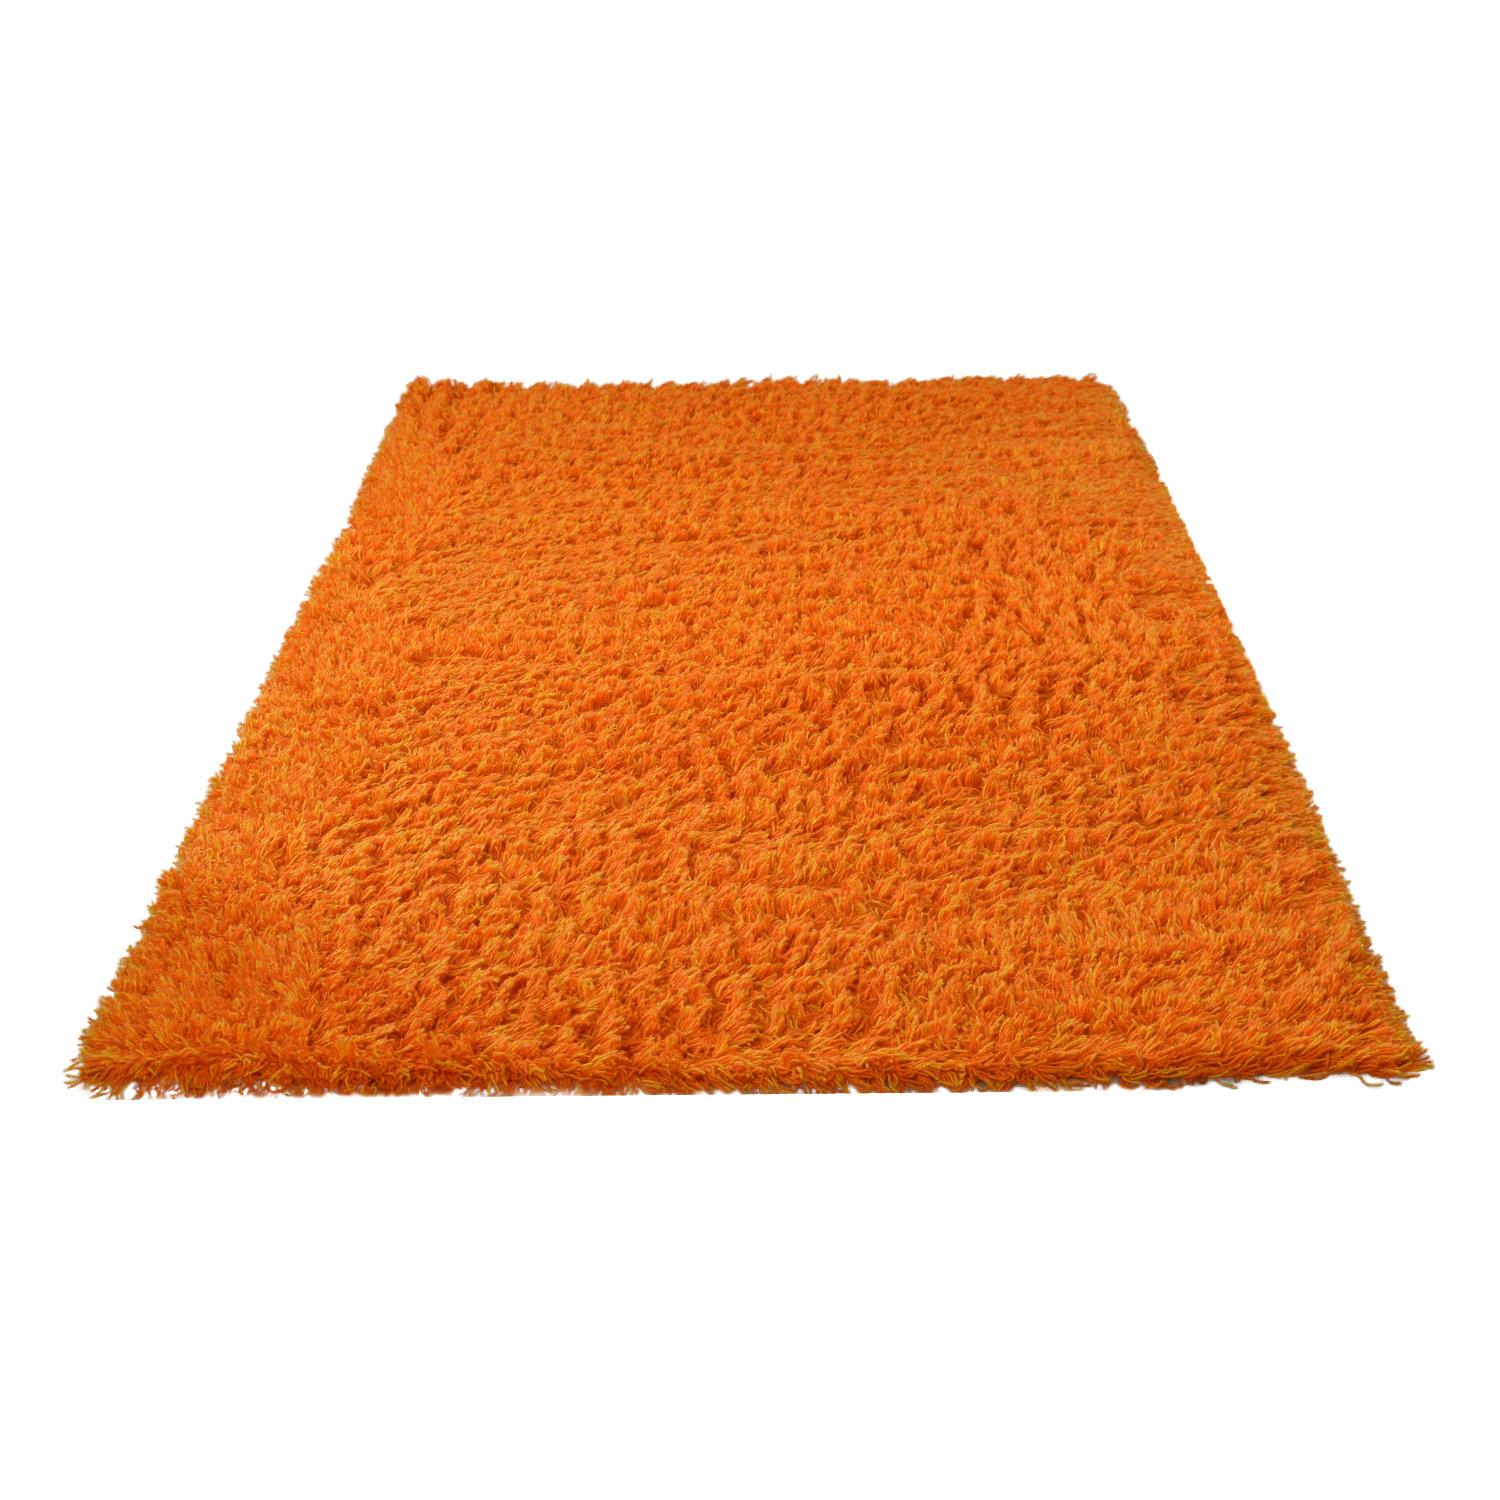 Wool Huge Vintage Orange and Yellow Scandinavian Rya Shag Area Rug Runner For Sale